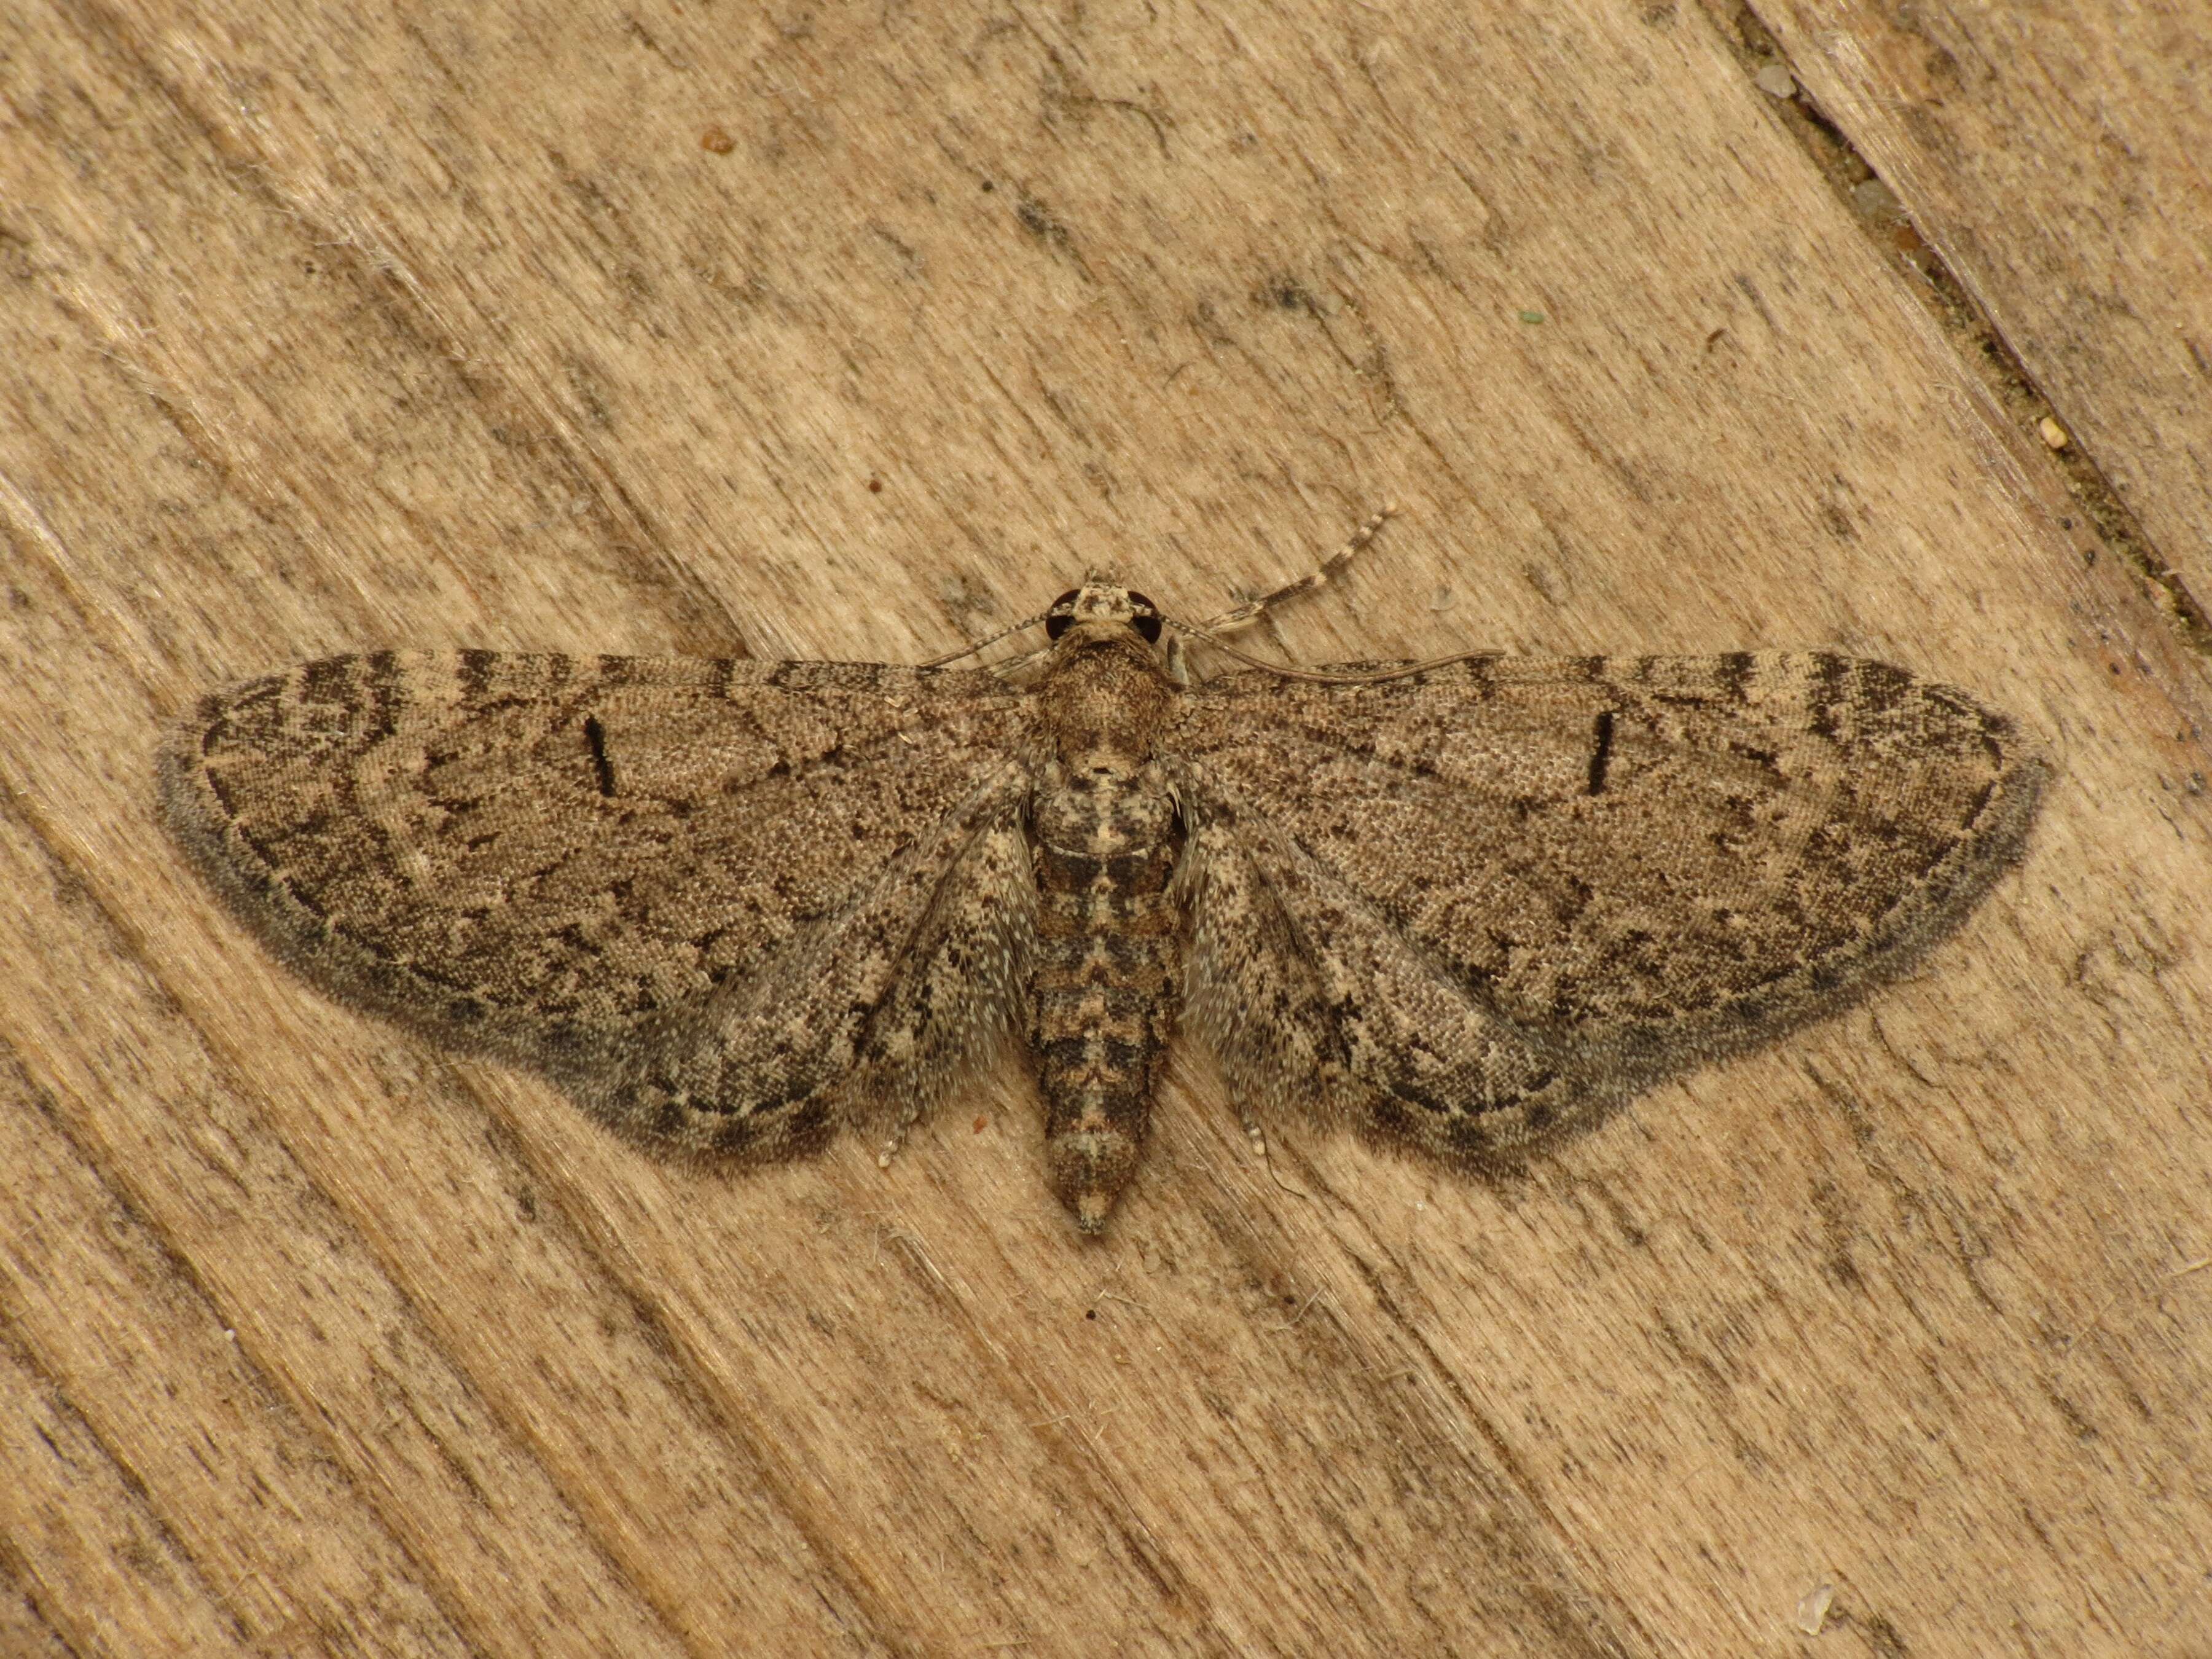 Image de Eupithecia